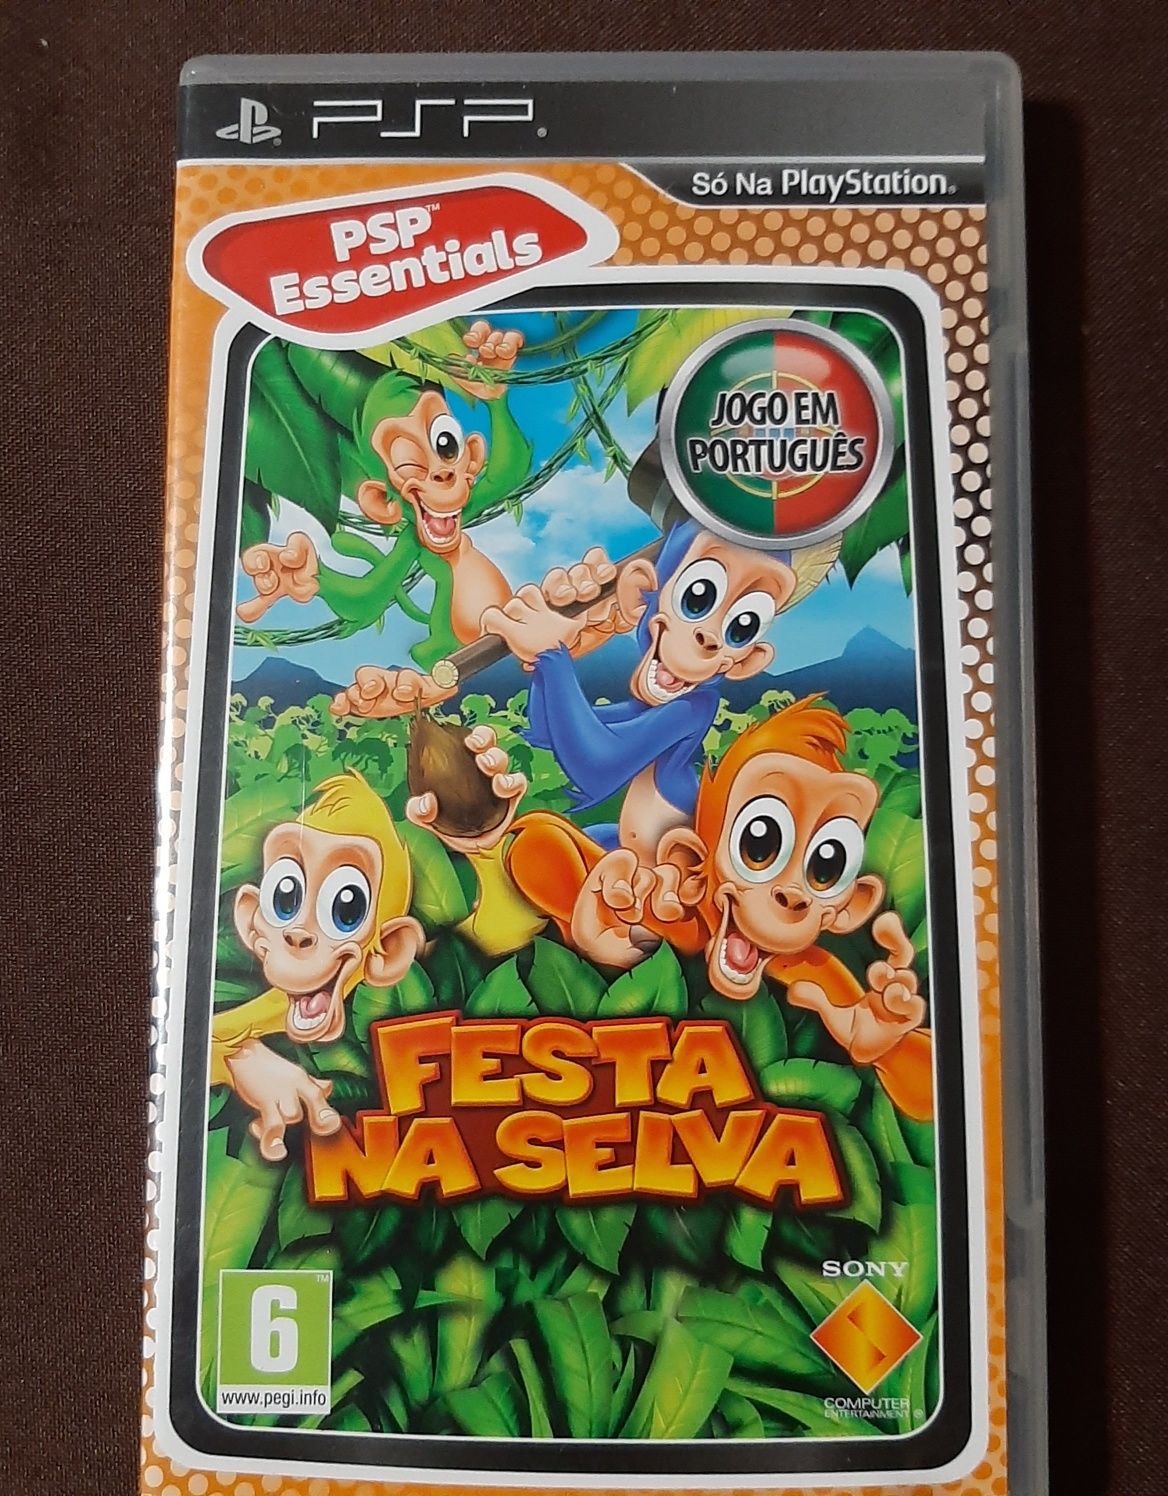 Festa Na Selva Essentials PSP - Compra jogos online na